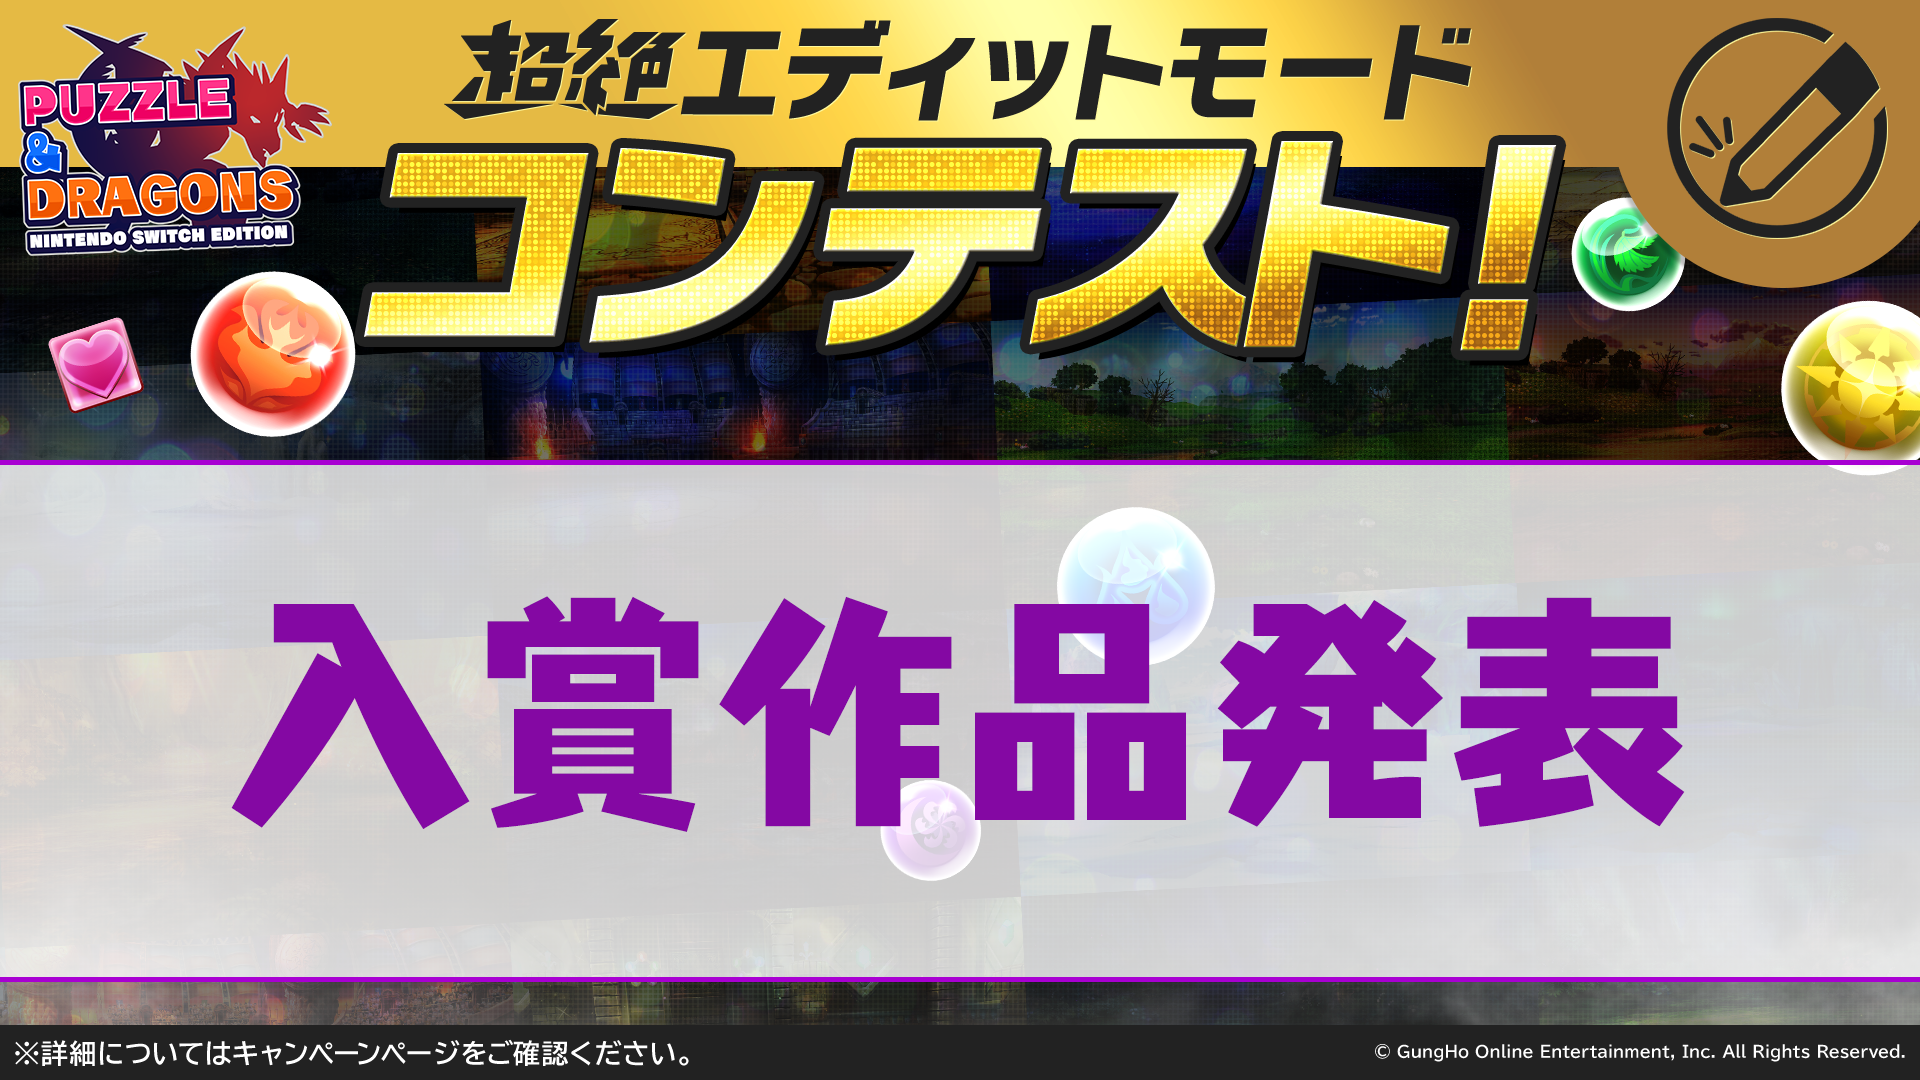 『PUZZLE & DRAGONS Nintendo Switch Edition』超絶エディットモードコンテスト入賞作品発表